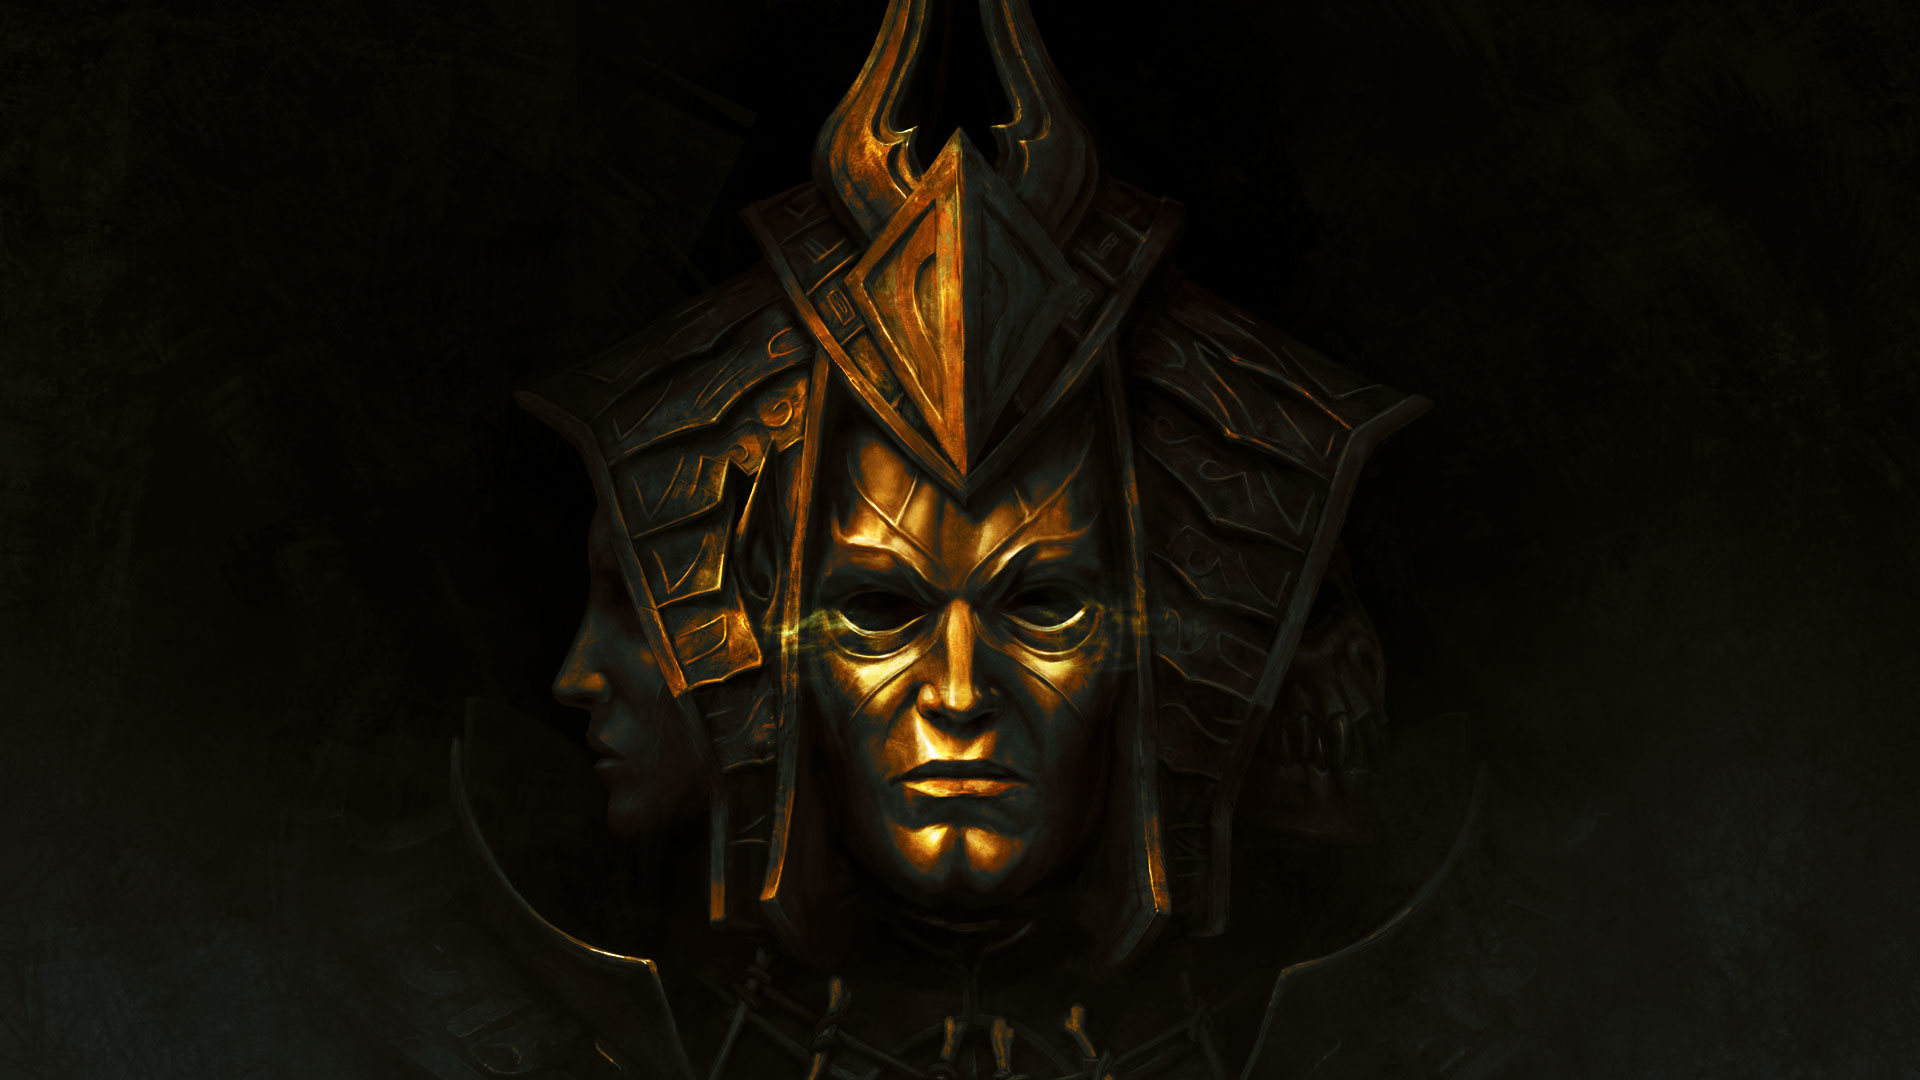 Divinity: Original Sin II HD wallpaper featuring a mystical golden armored figure on a dark background, ideal for desktop customization.